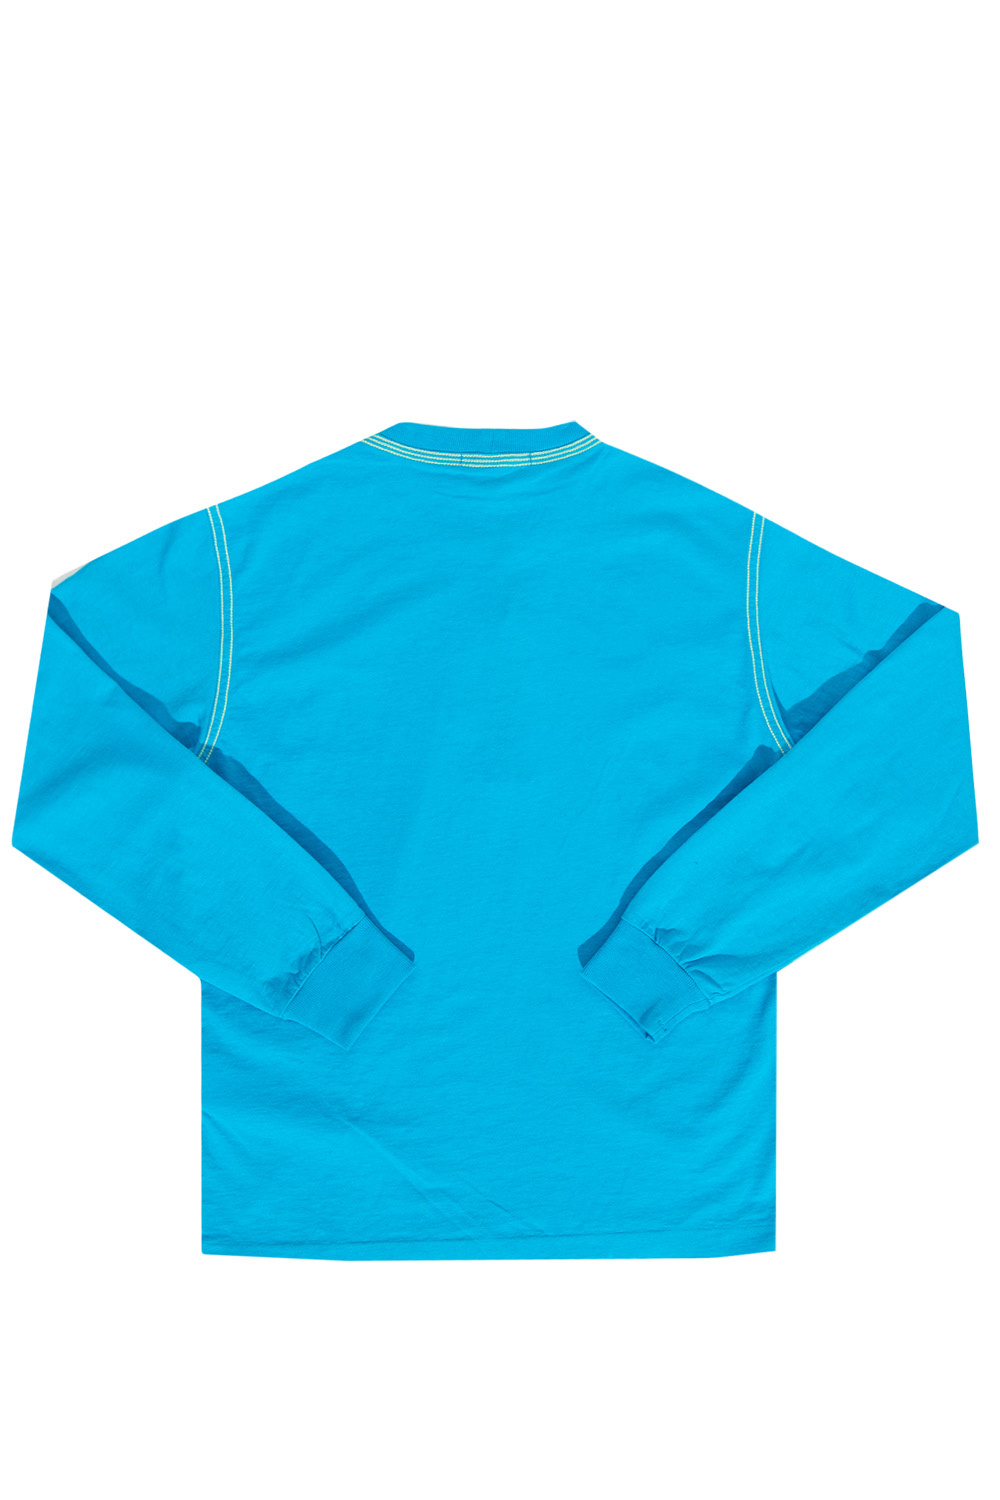 Napapijri Balis Full Zip Sweatshirt Long-sleeved T-shirt